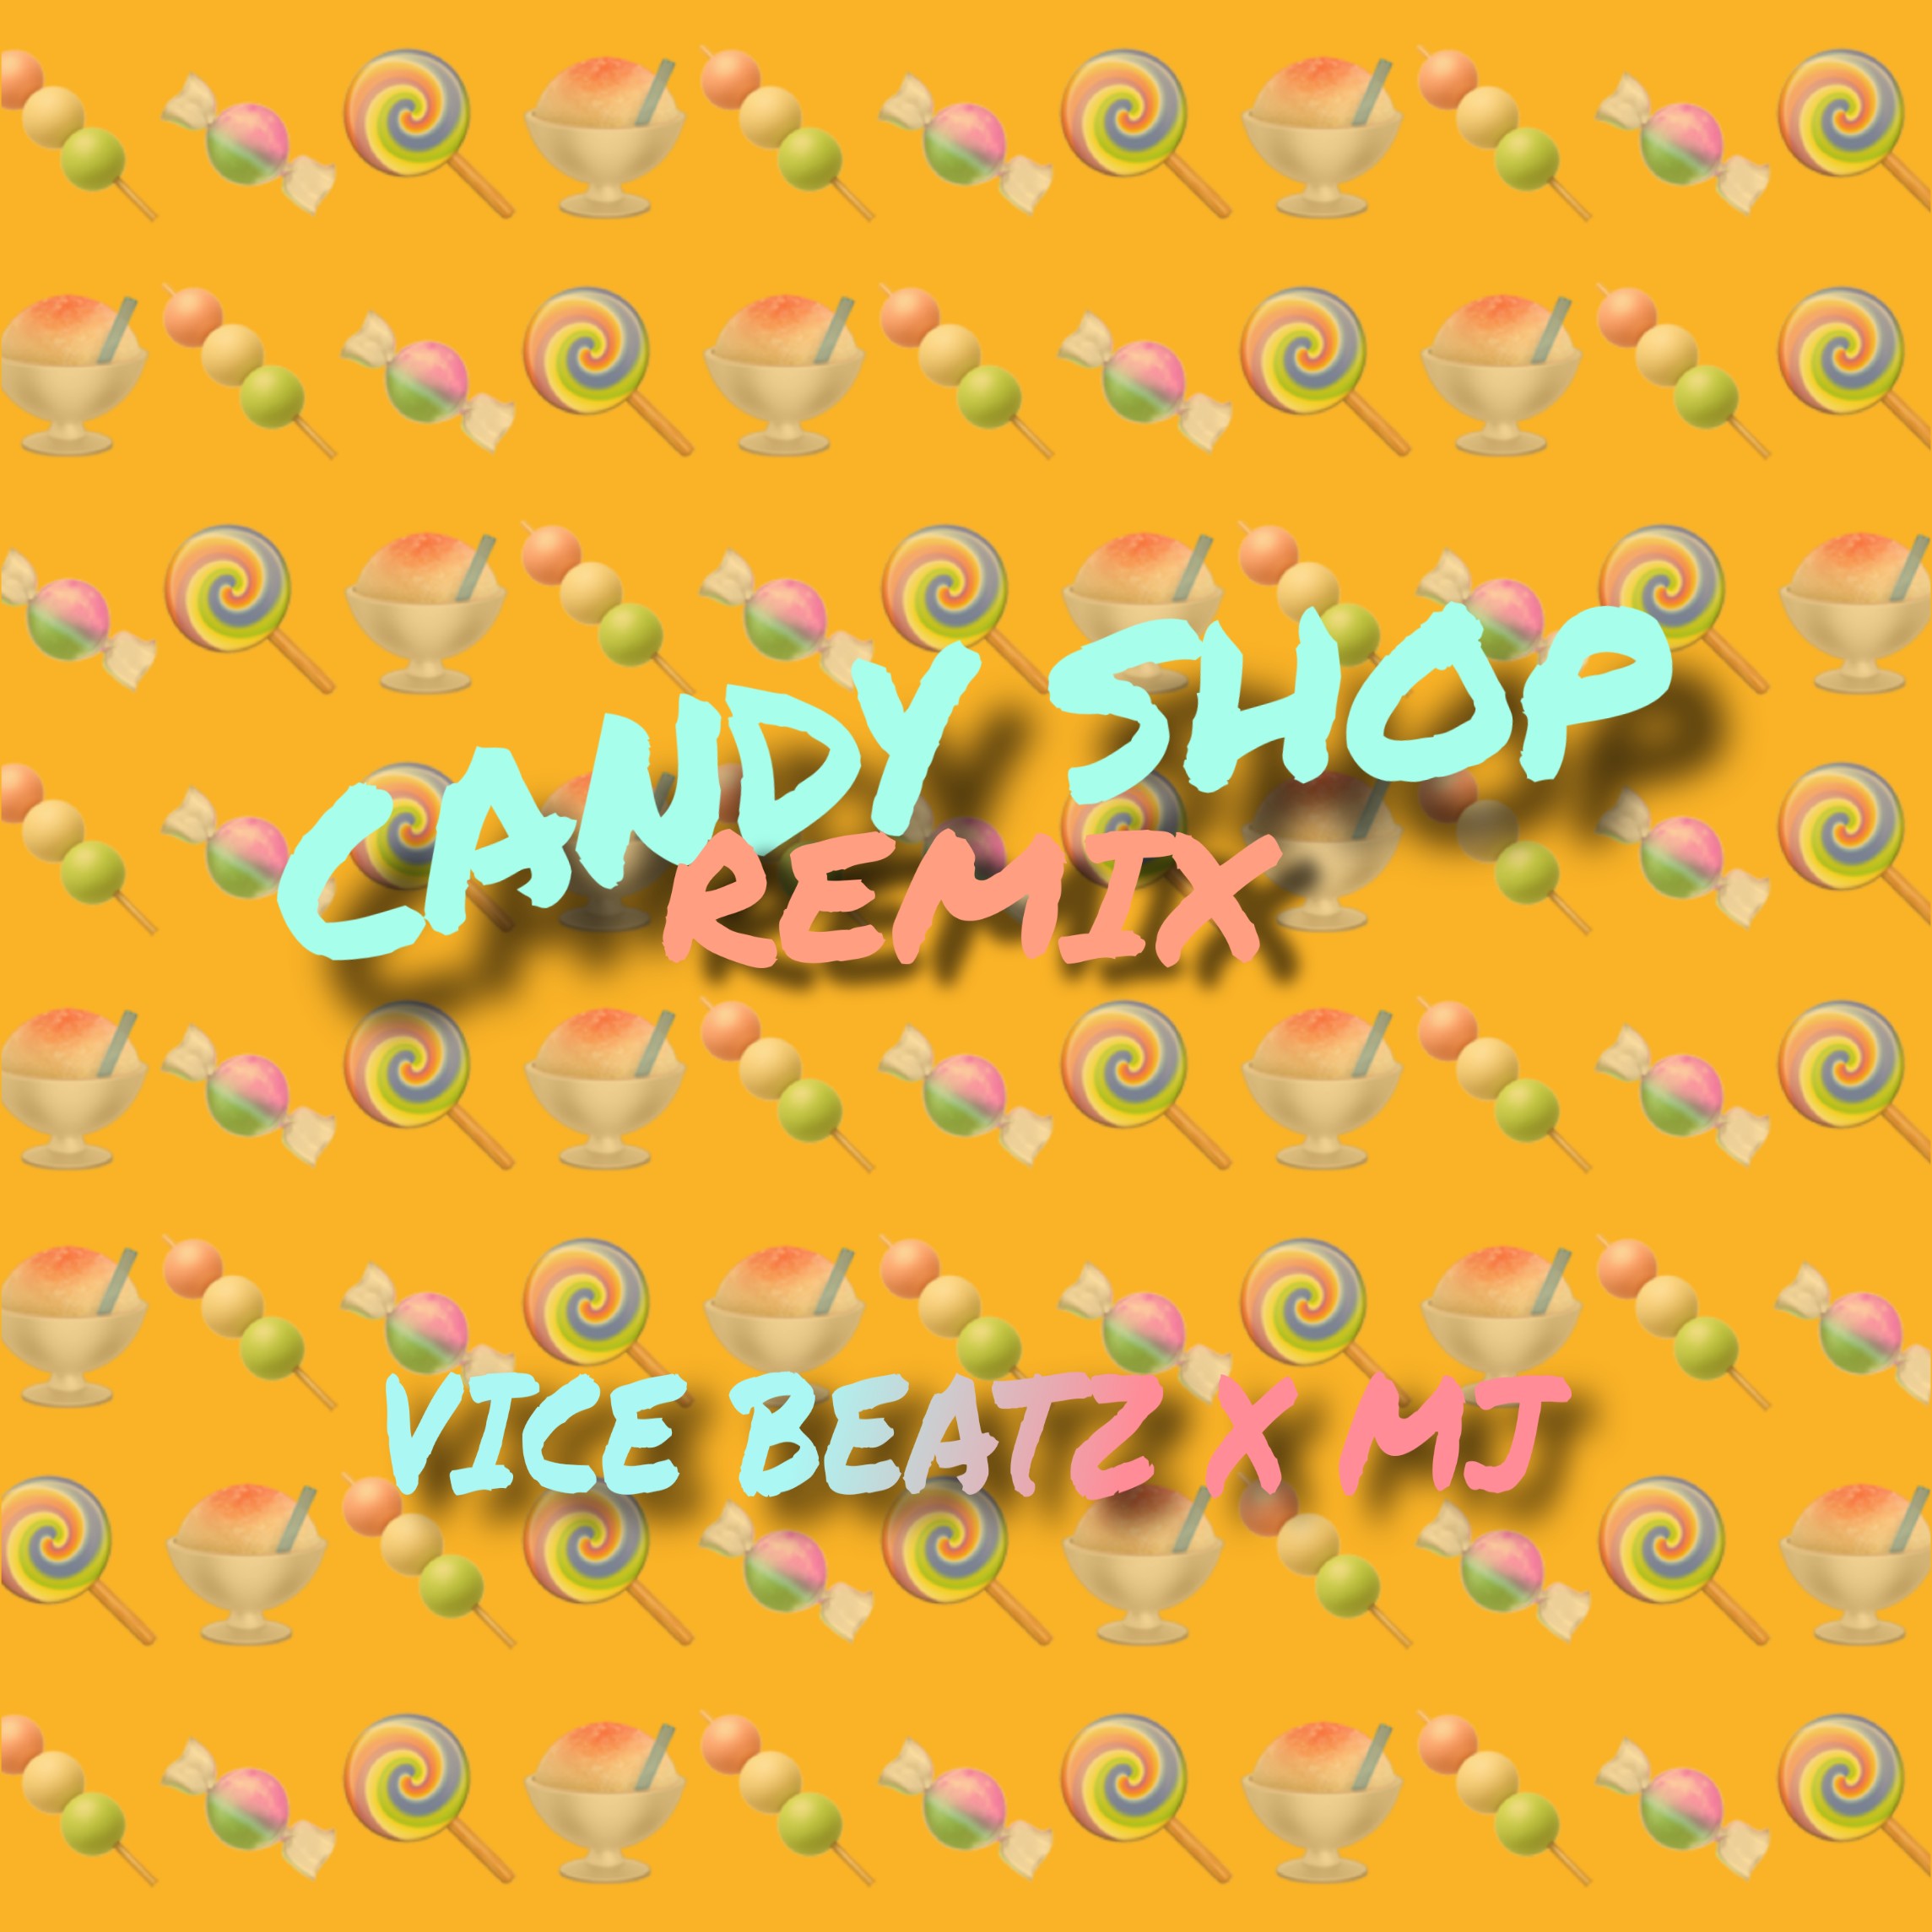 डाउनलोड करा Candy Shop (Vice_Beatz & MJ Remix)_ CLICK ON 'BUY' For Free Download